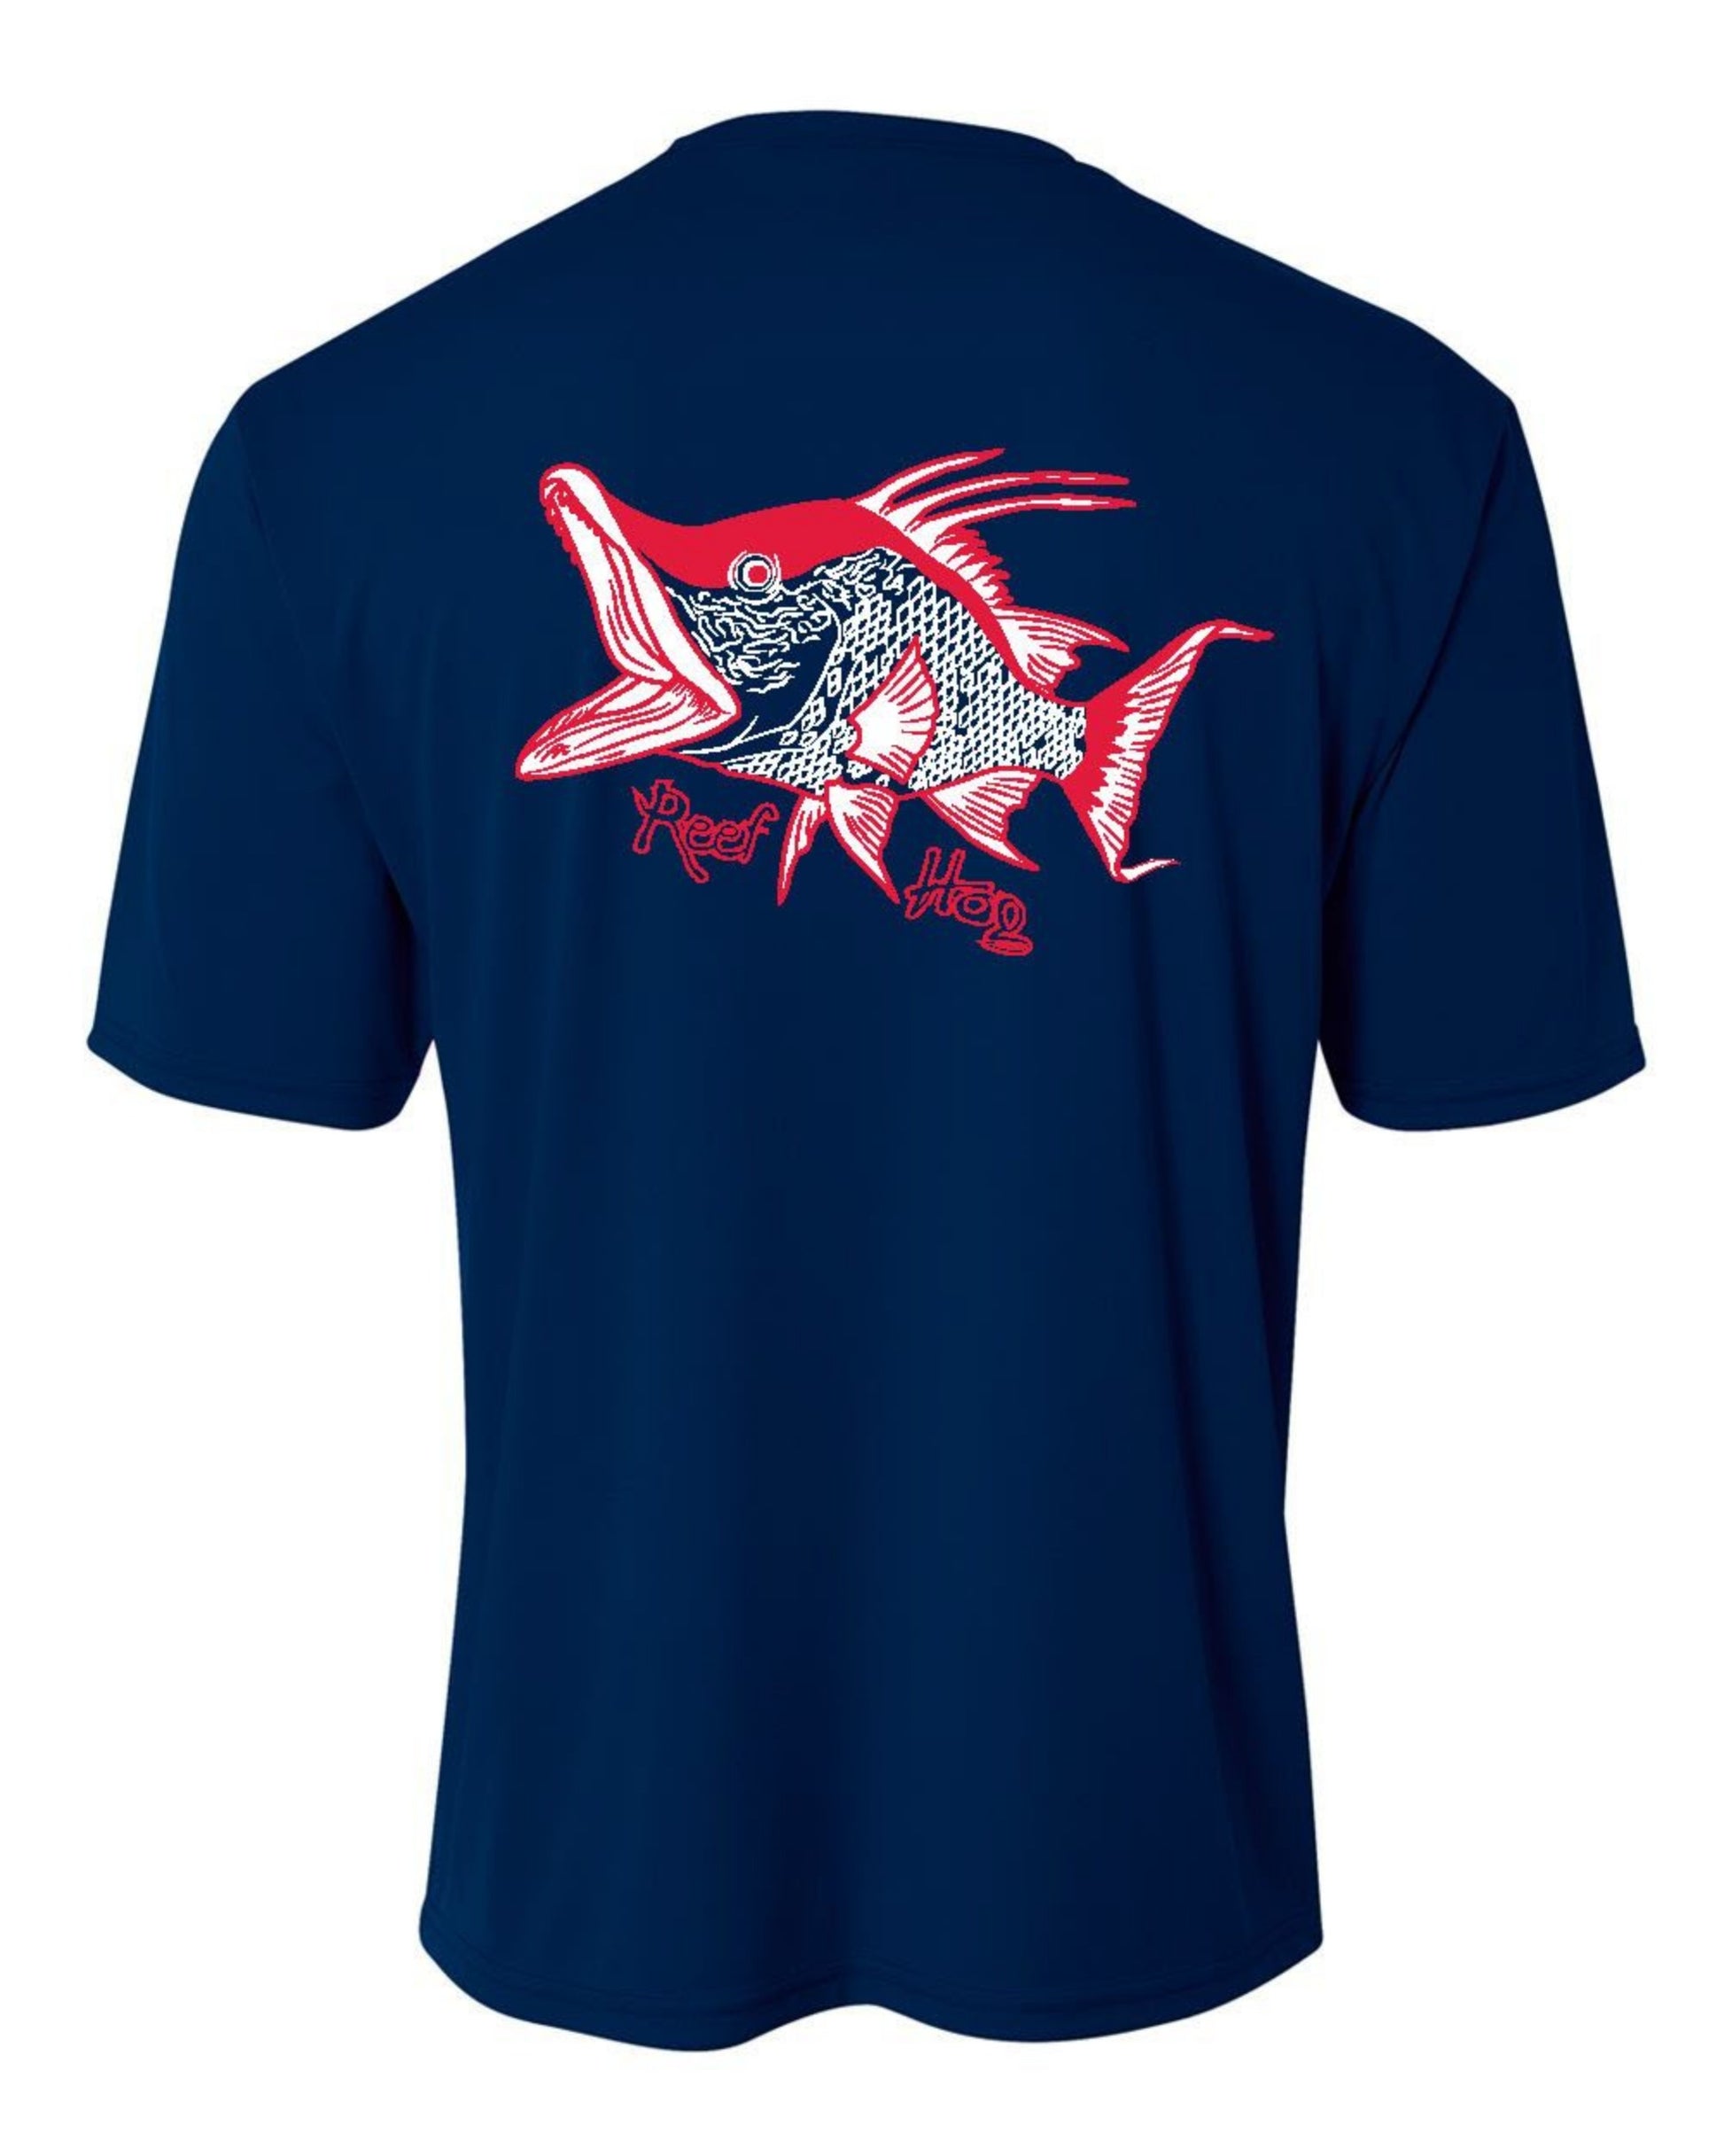 Youth Performance Fishing Shirts 50+UV Sun Protection -Reel Fishy Apparel